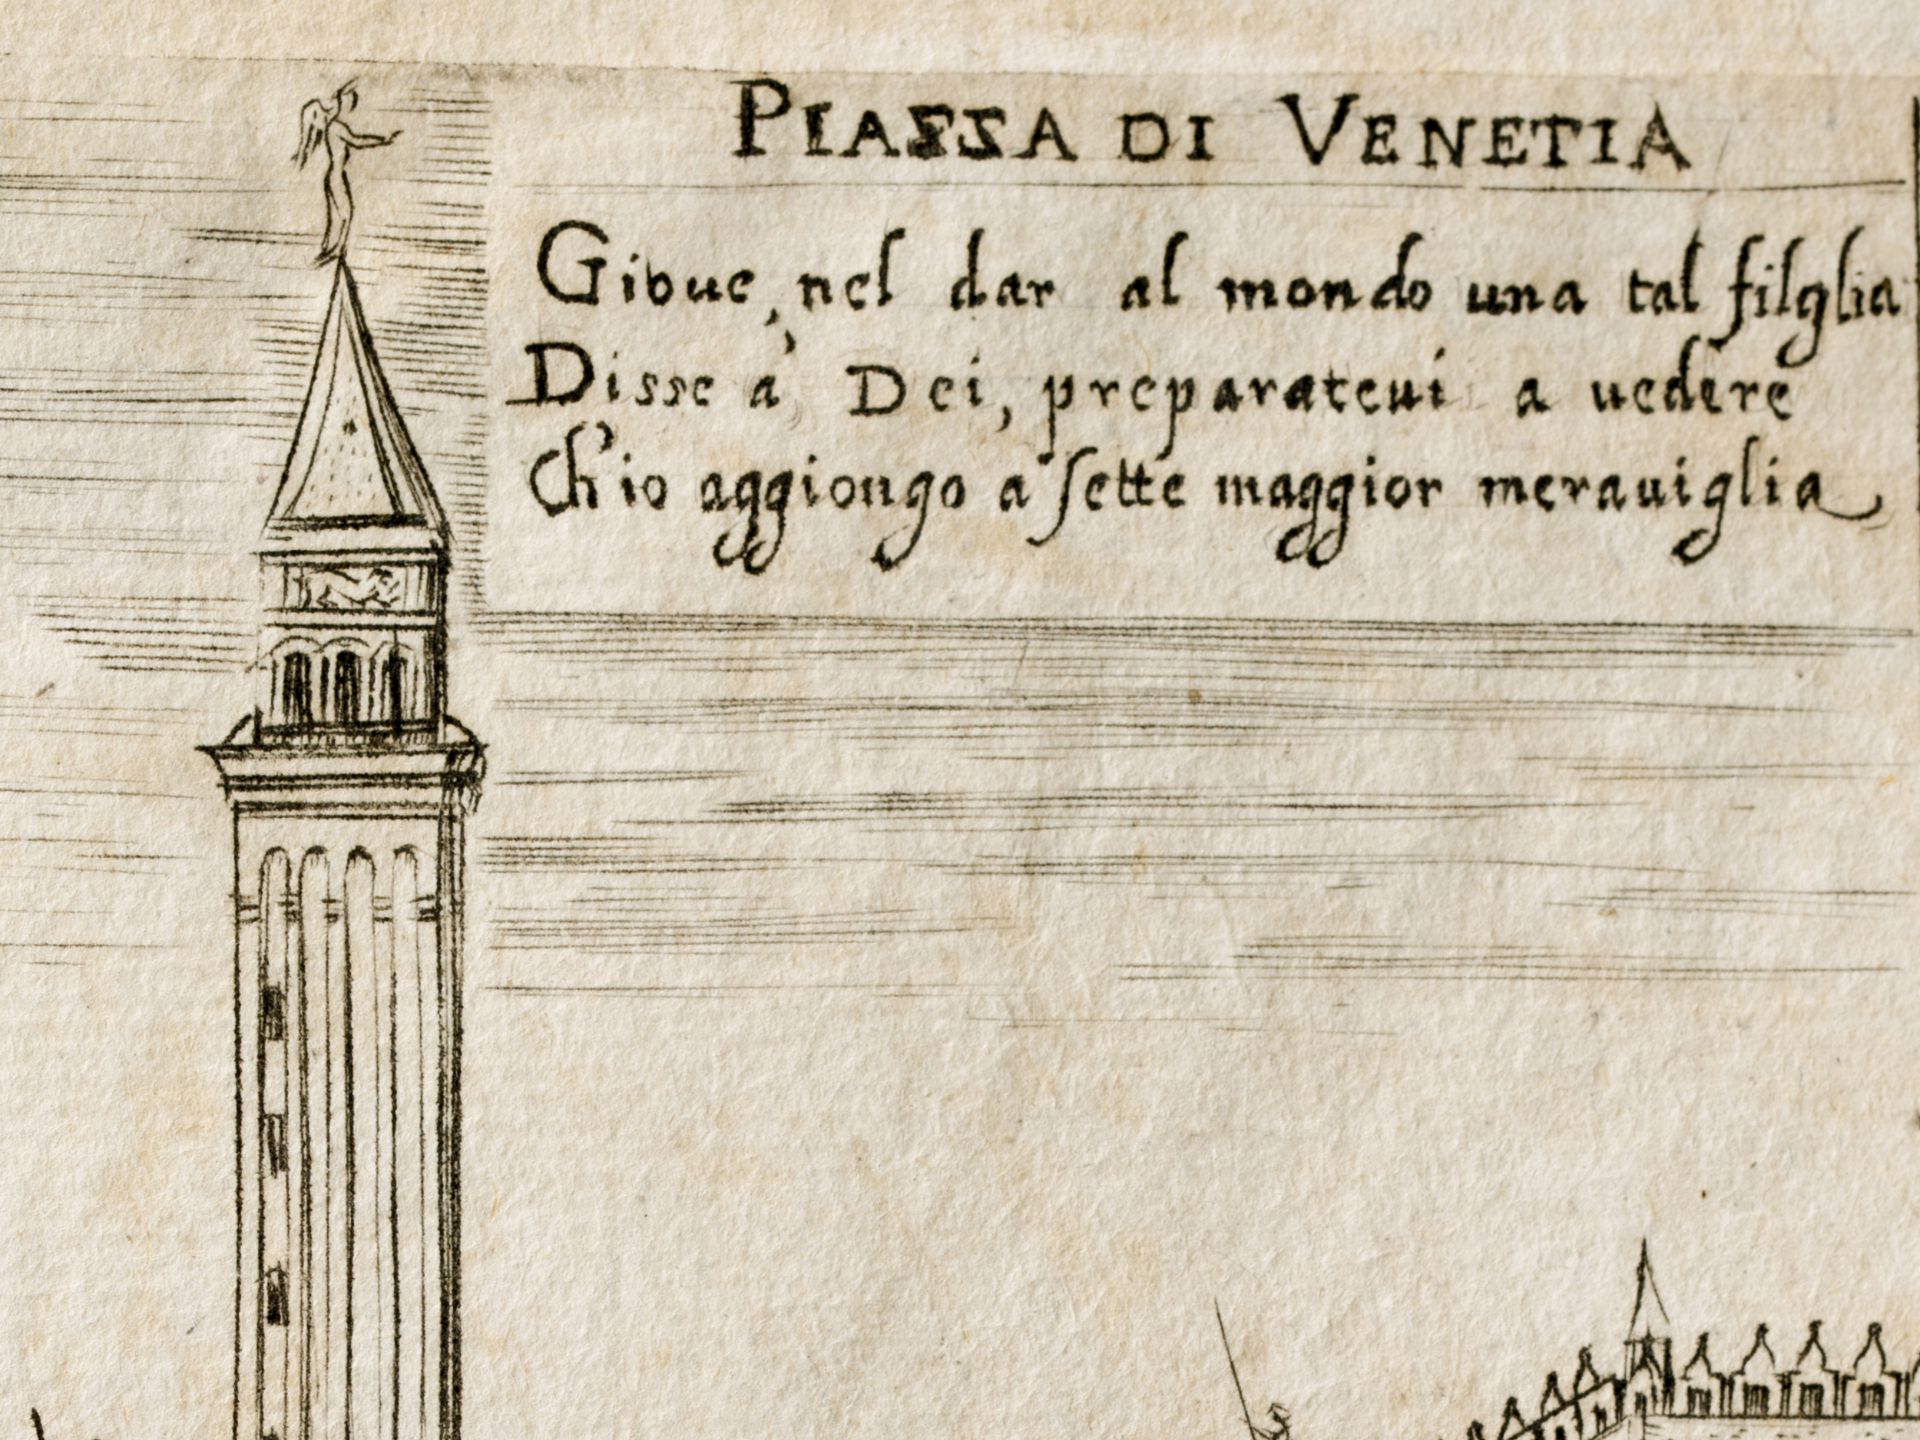 "Piazza di Venetia", Etching - Image 2 of 2